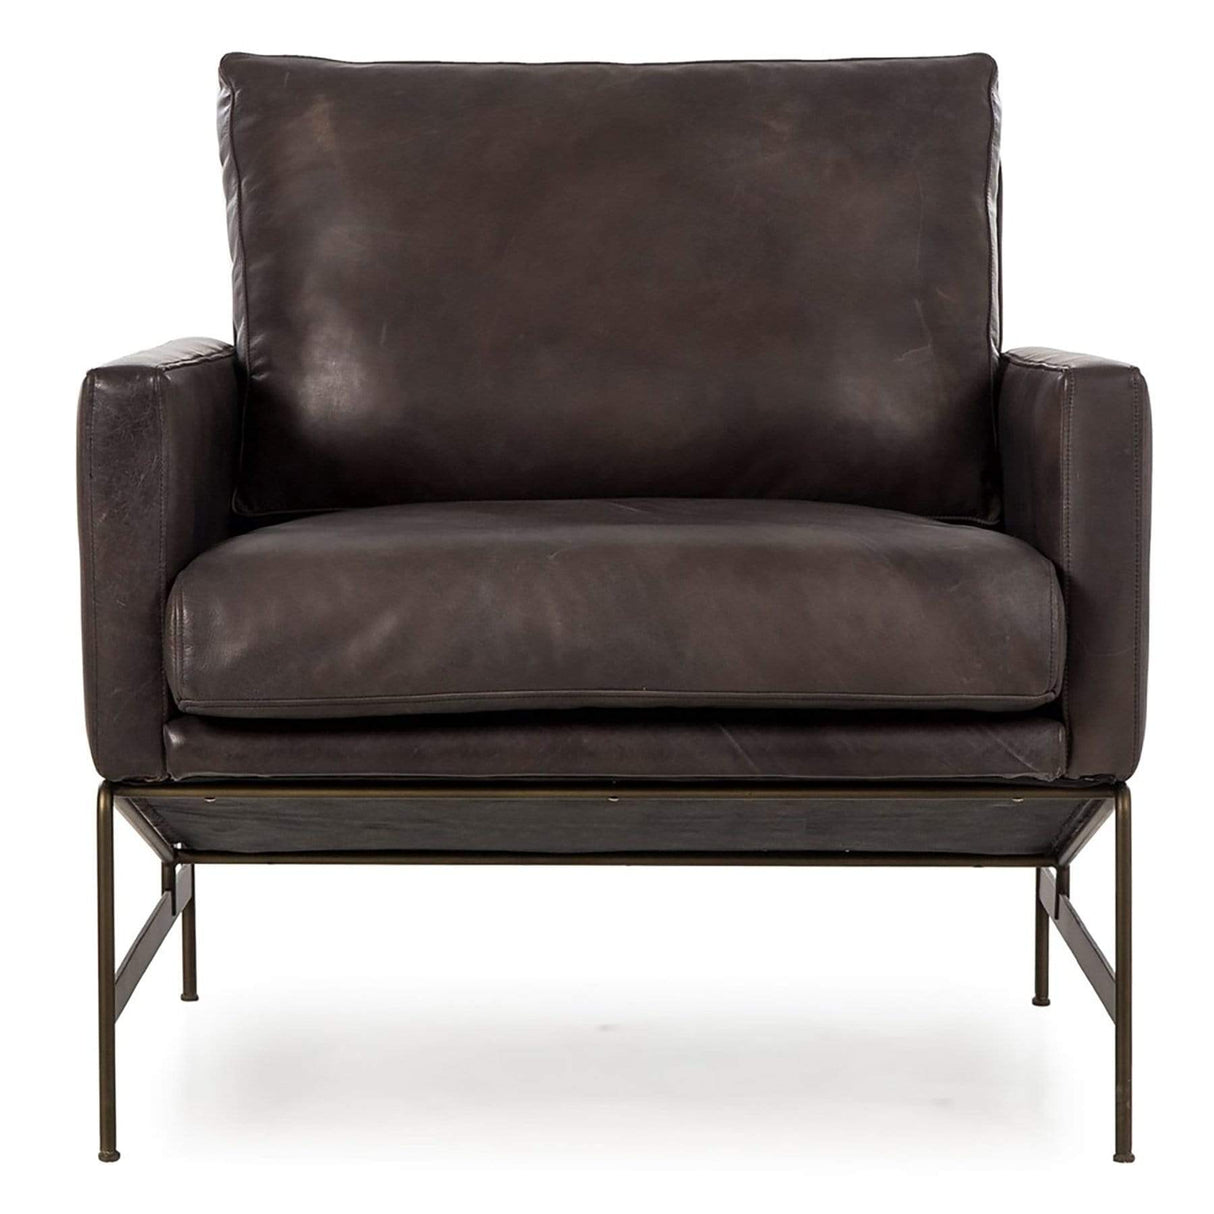 Thomas Bina Vanessa Chair - Destroyed Black Leather Furniture thomas-bina-0702146